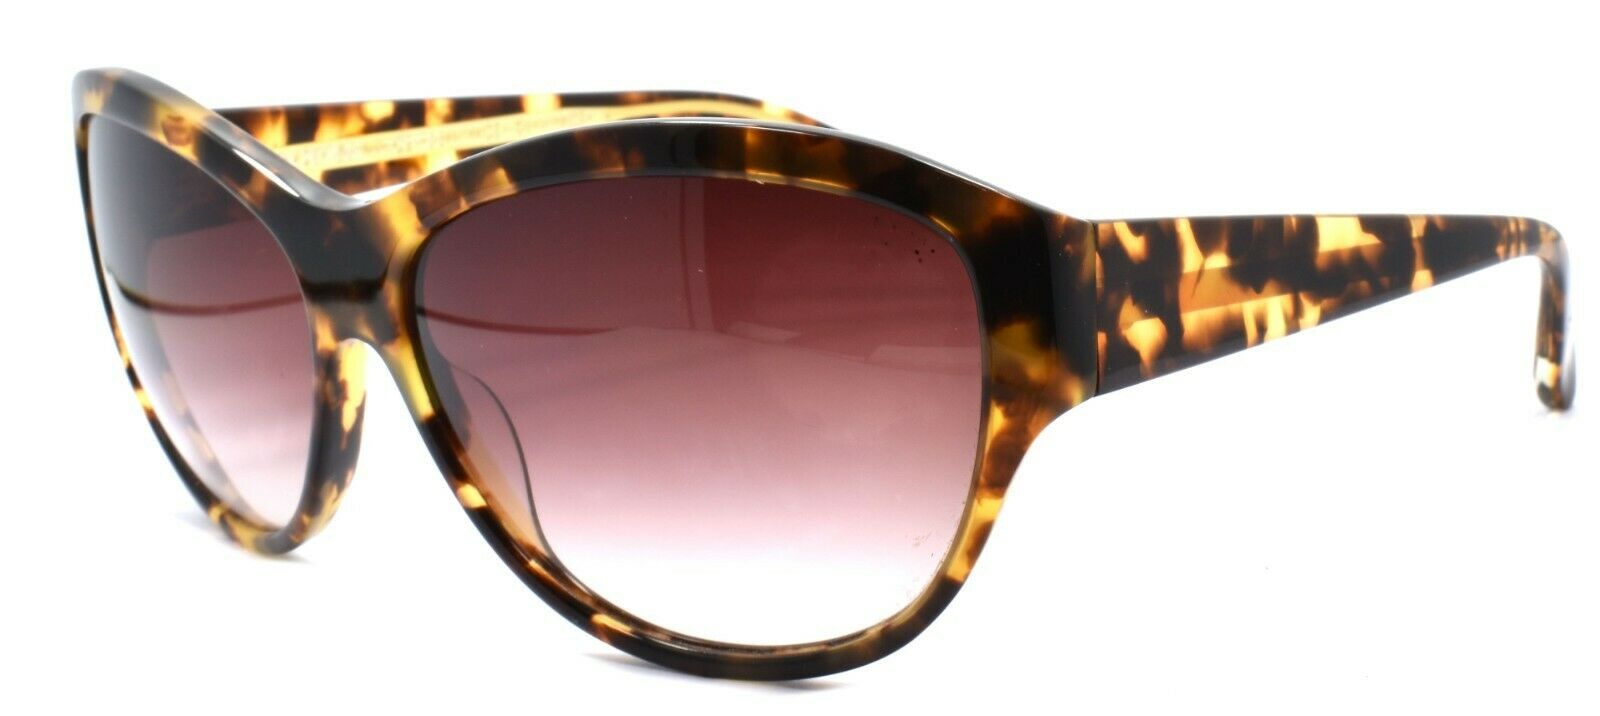 1-Oliver Peoples Cavanna DTS Women's Sunglasses Tortoise / Pink Gradient JAPAN-Does not apply-IKSpecs